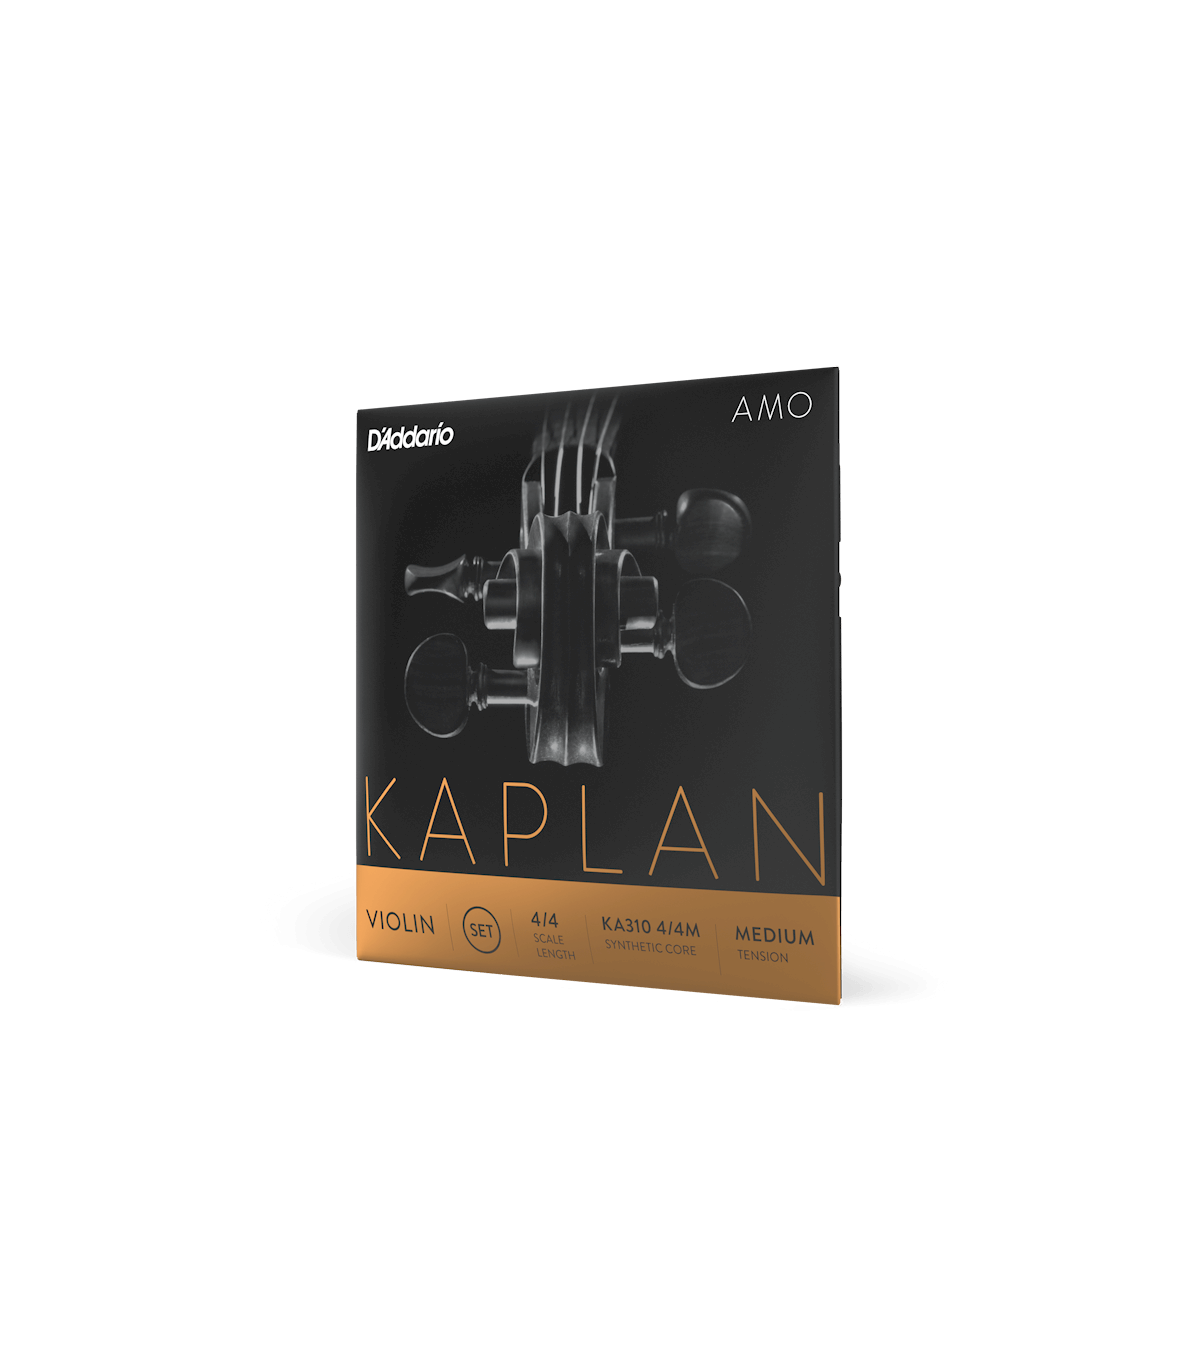 4/4 Scale media tensione ka311 4 D'ADDARIO Kaplan Amo violino e String 4m 